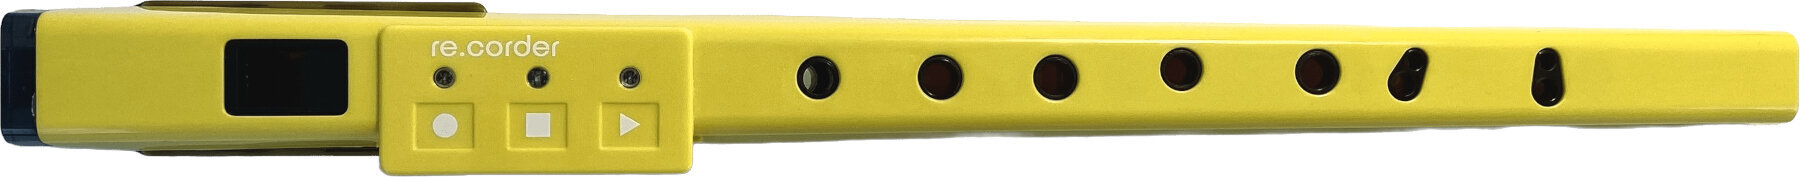 Instrumento de sopro híbrido Artinoise Re.corder Yellow Instrumento de sopro híbrido